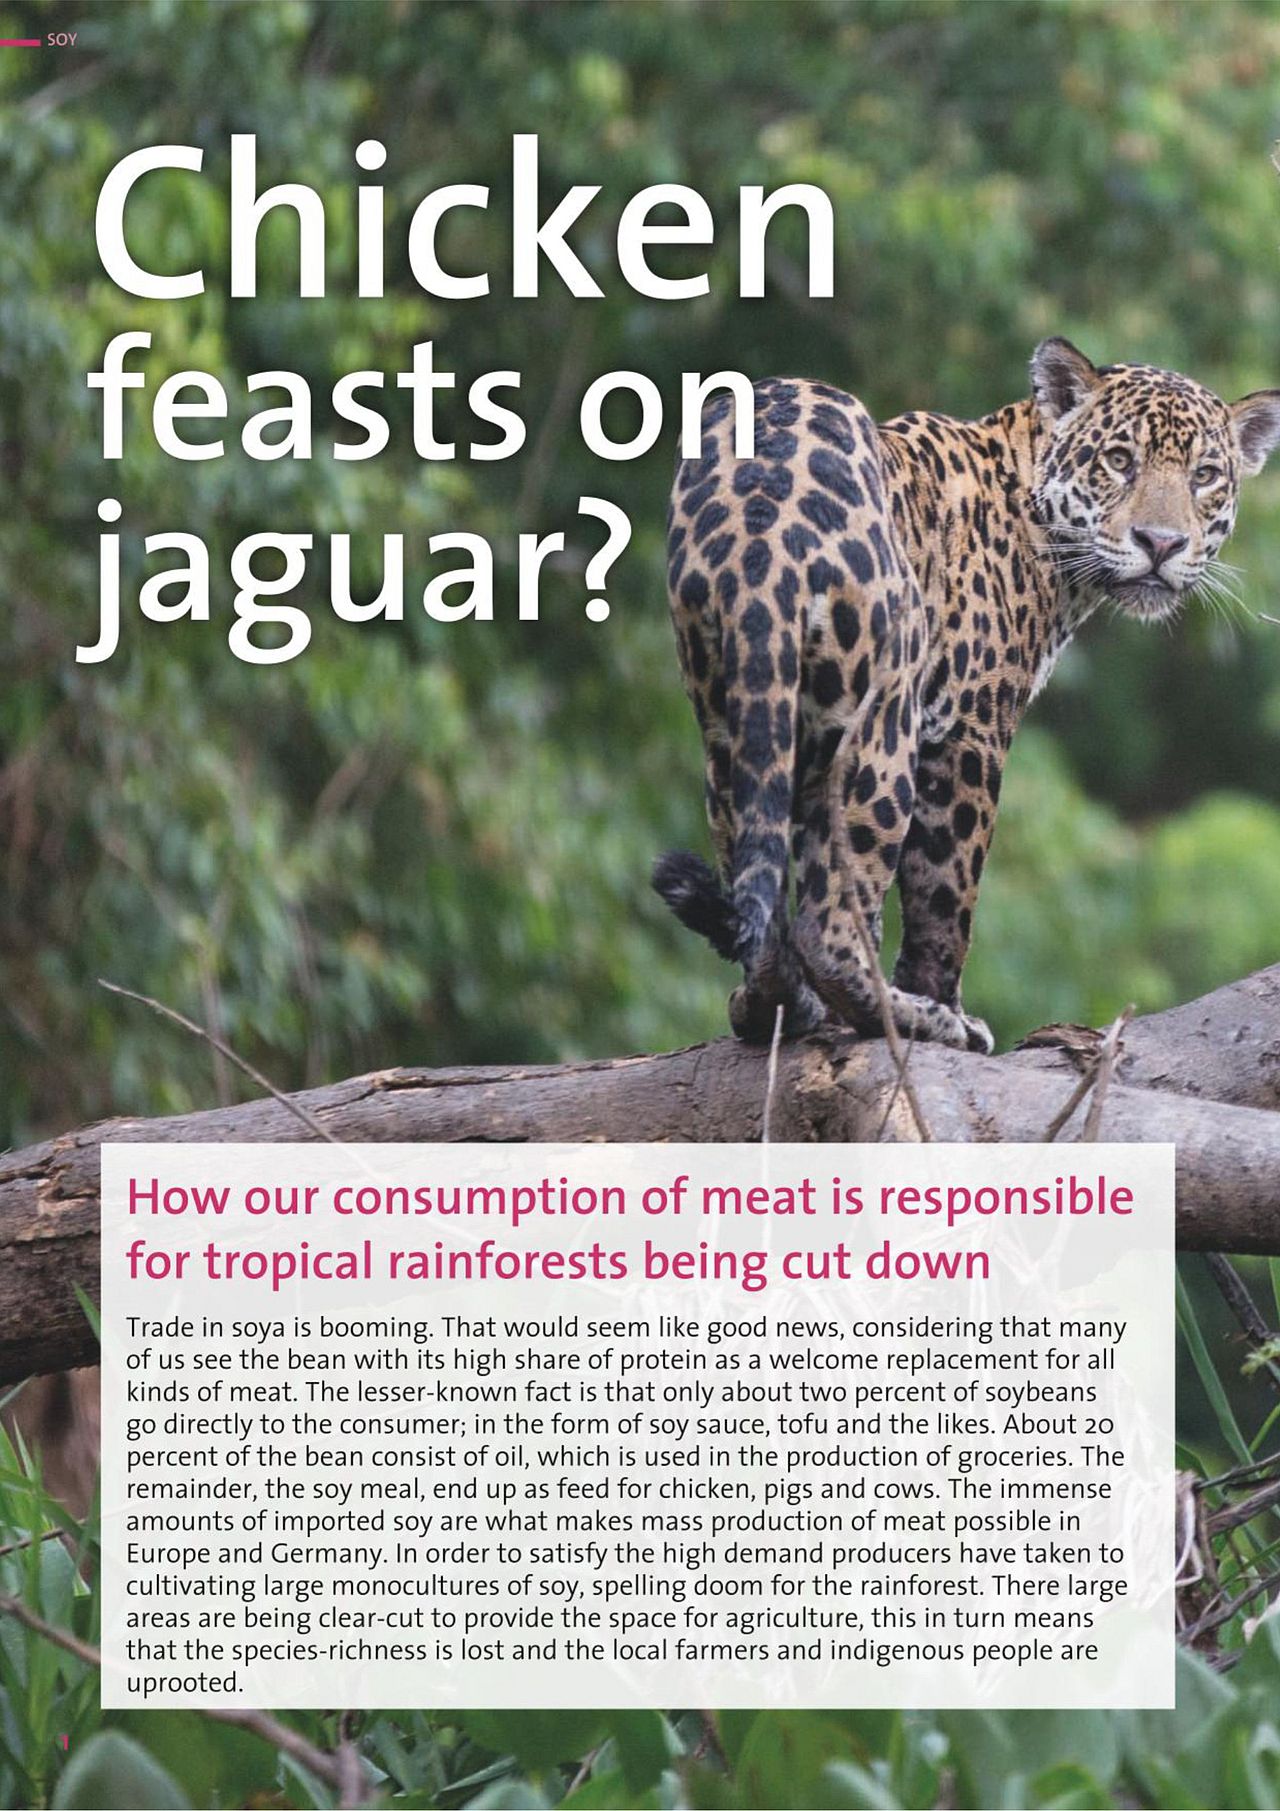 hicken - Feasts on Jaguar - Factsheet by OroVerde